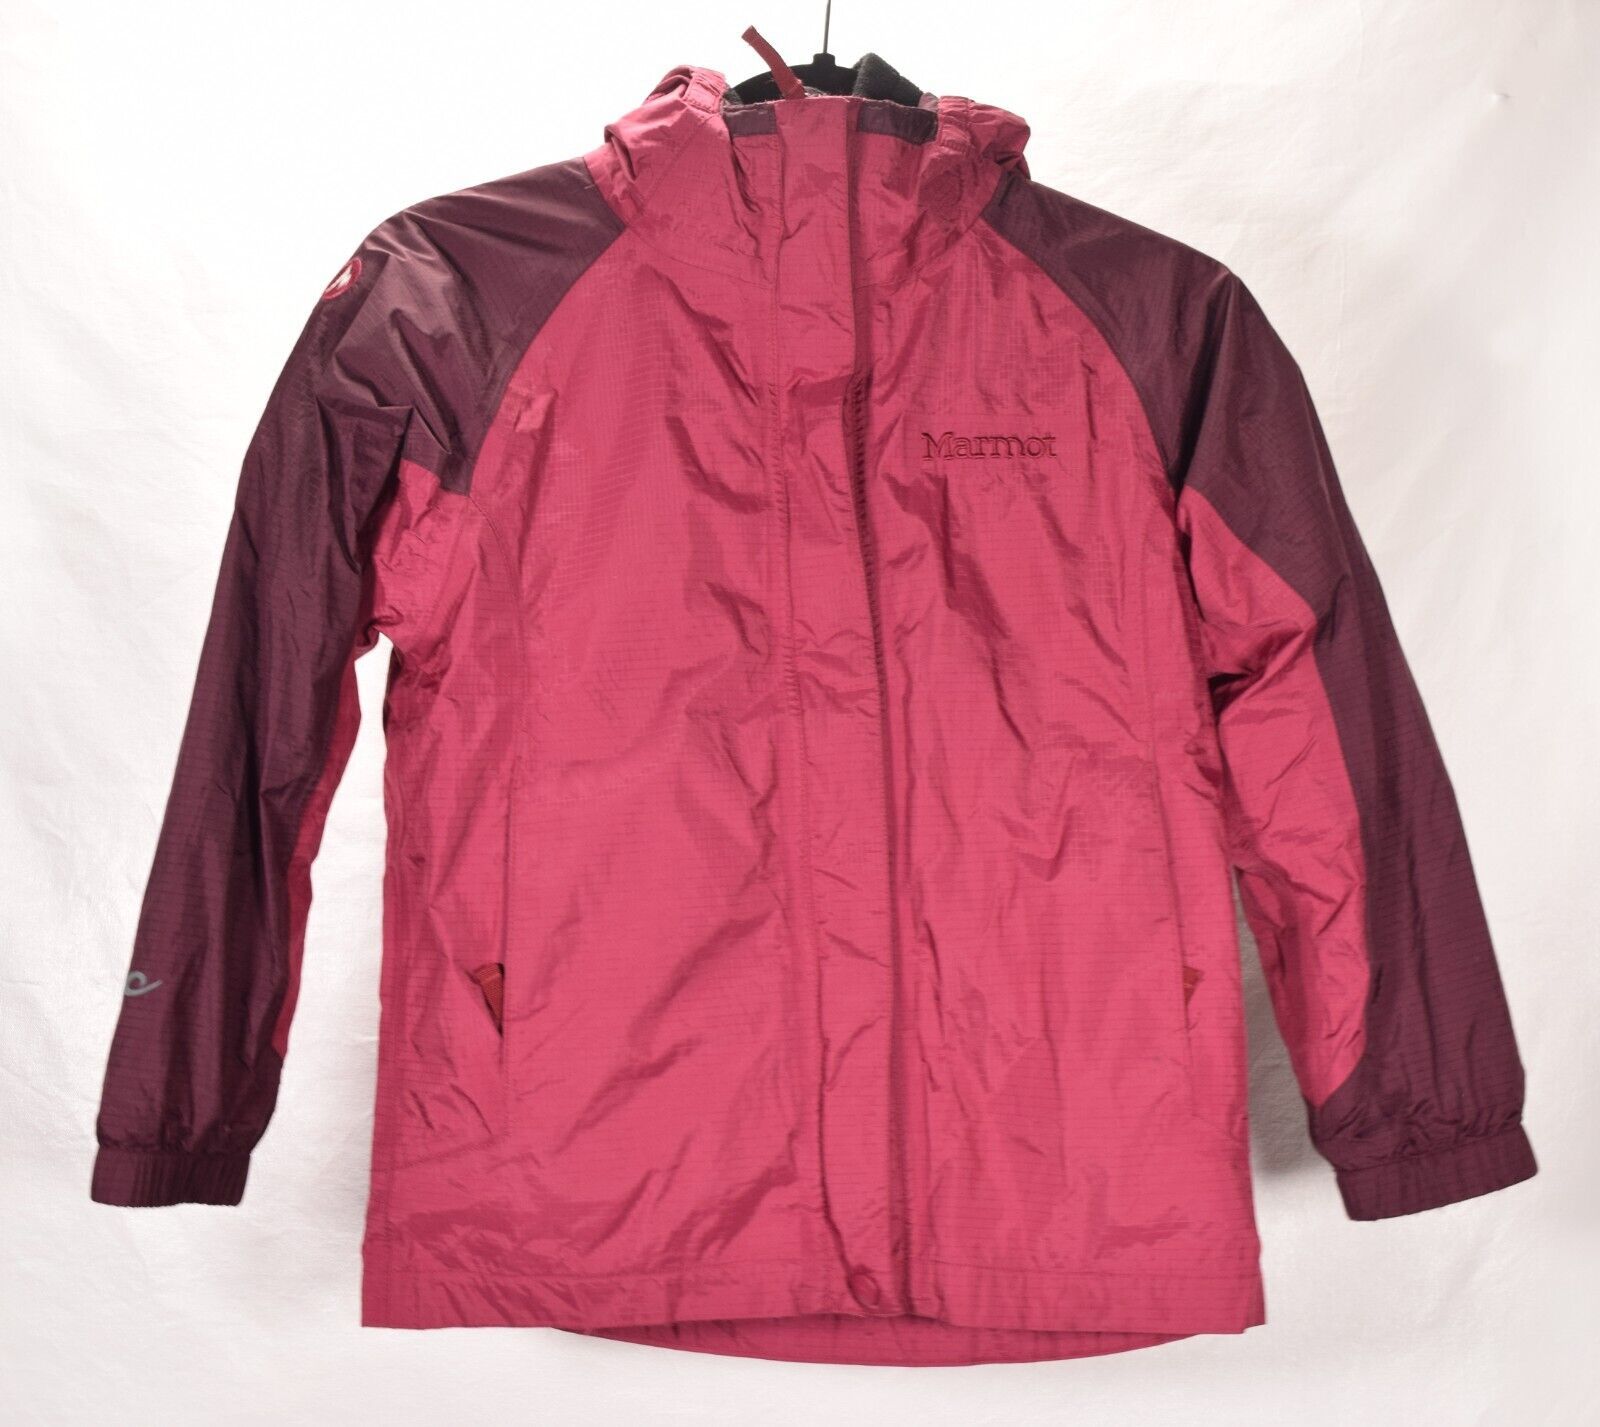 Primary image for Marmot 3 in 1 Girls Zip in Fleece outer Lightweight Wind Breaker Jacket Rain